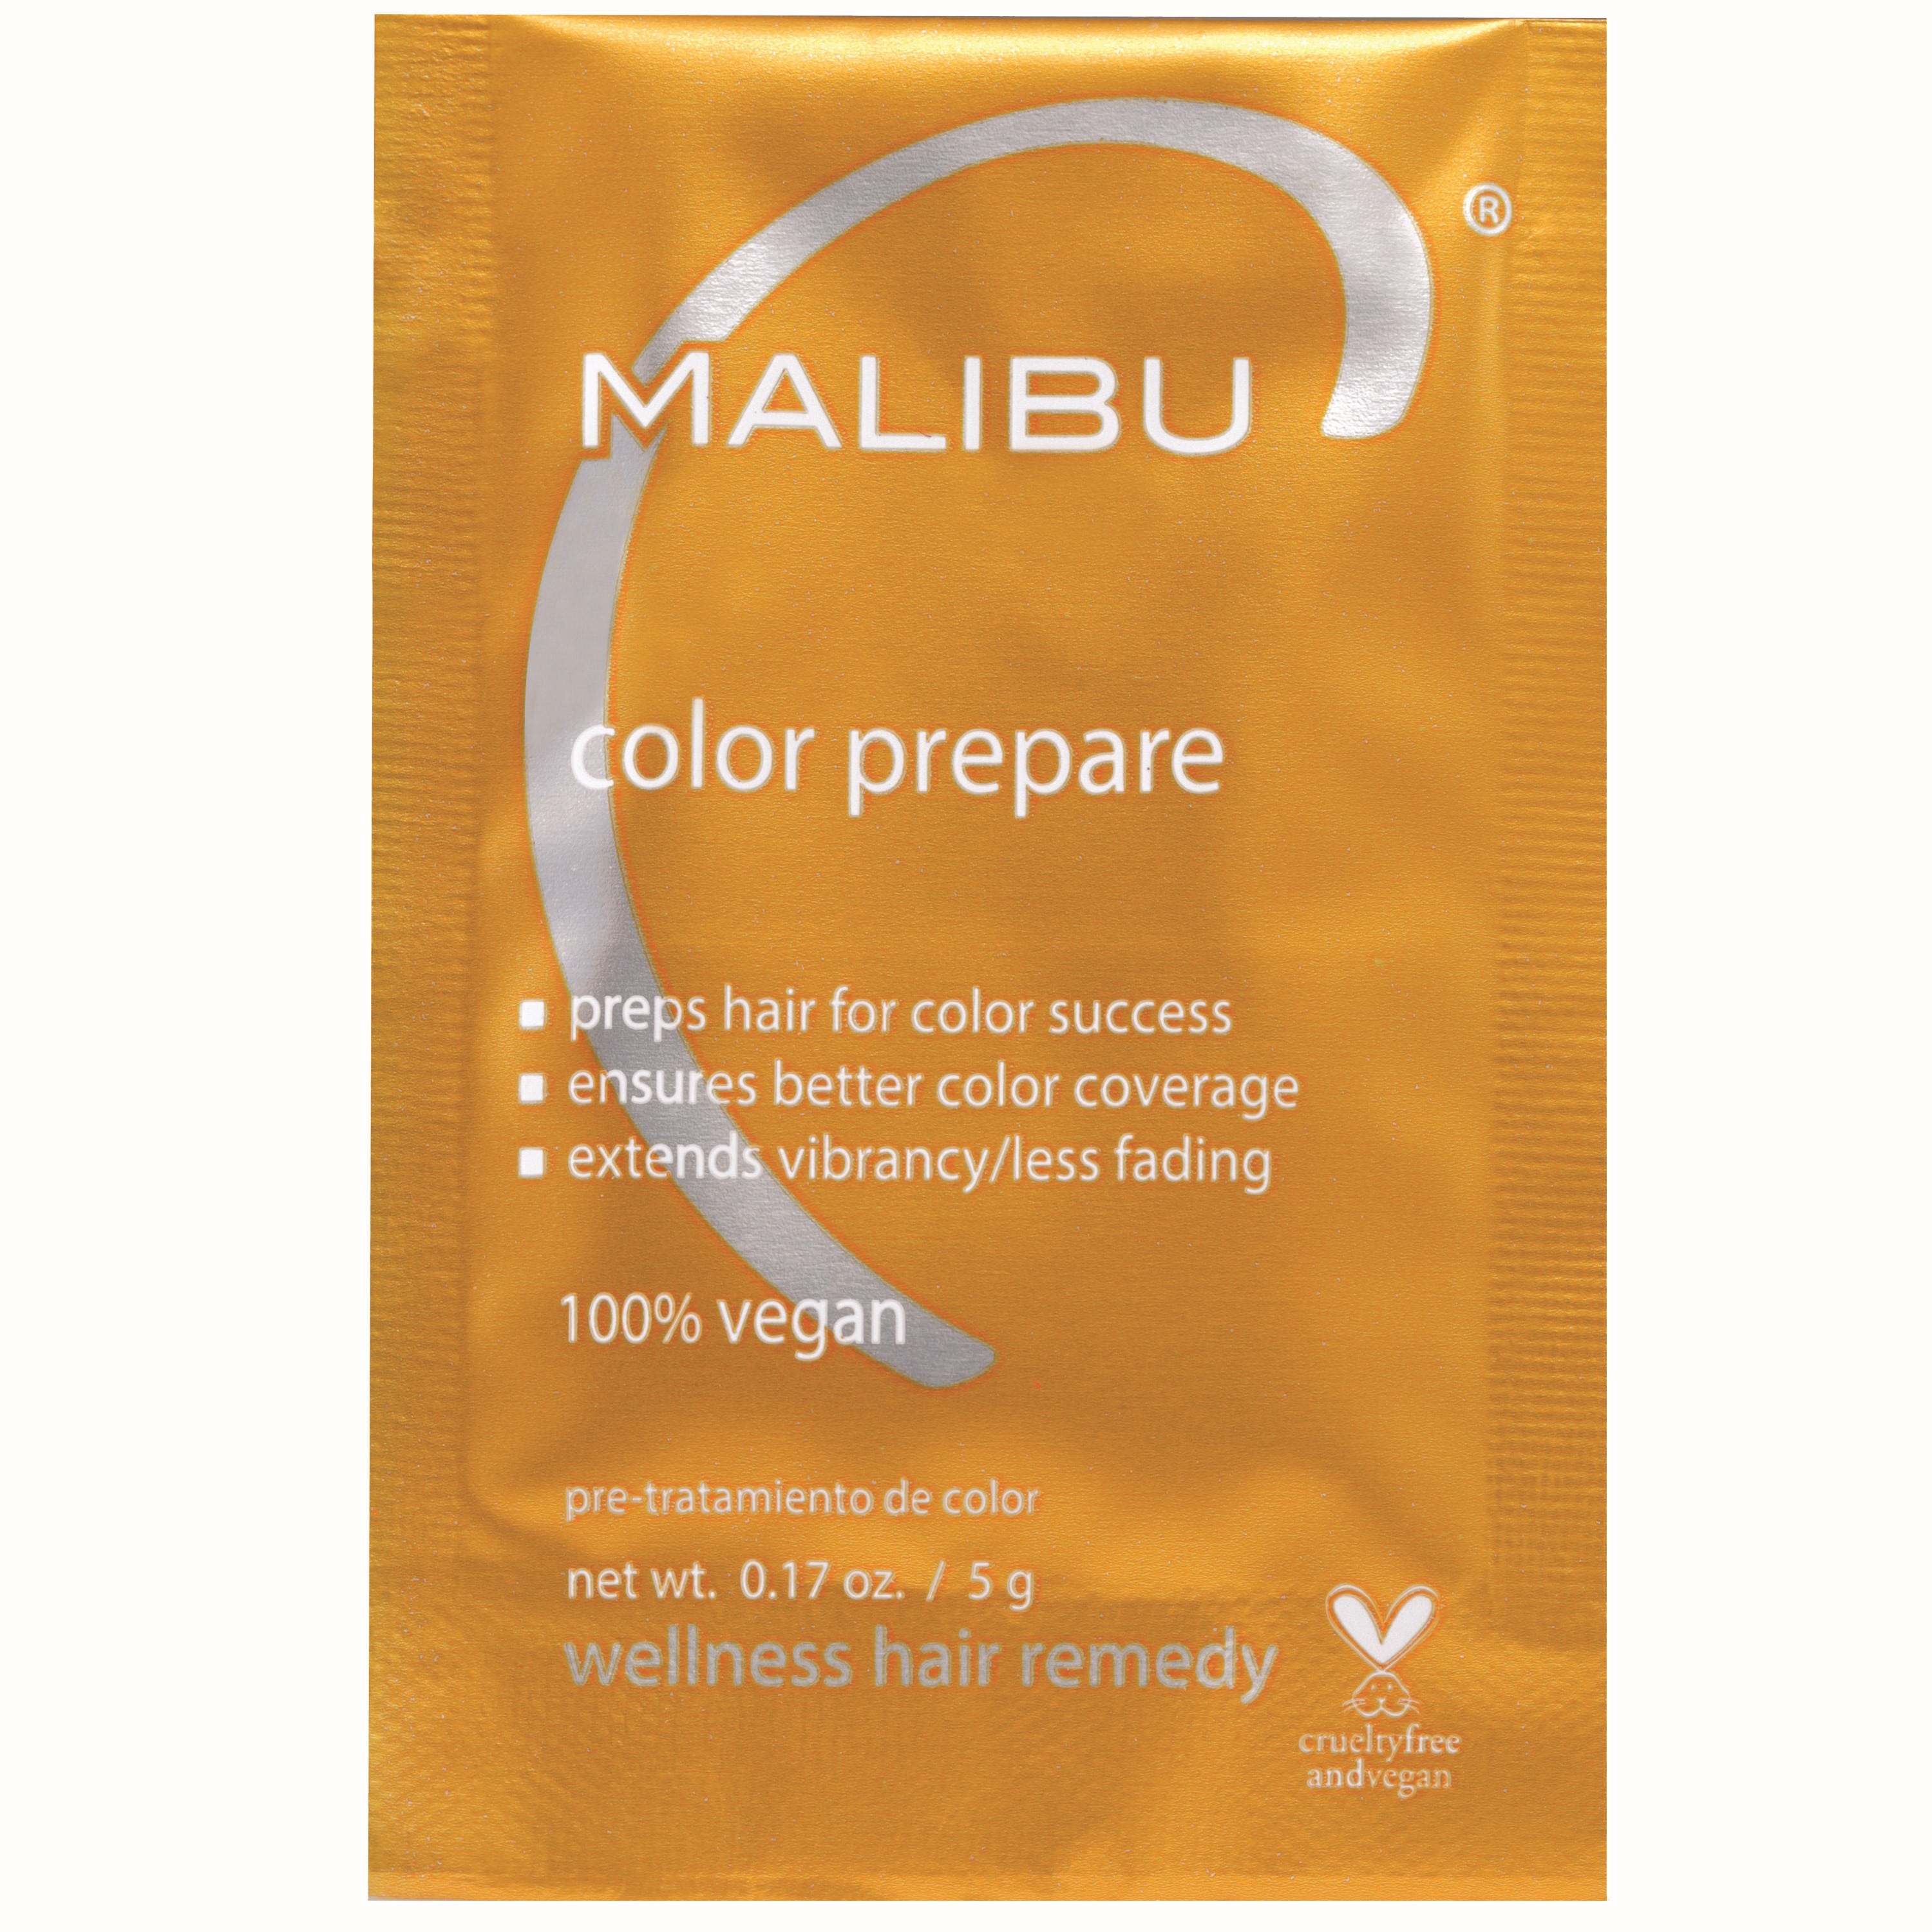 Malibu C Color Prepare Wellness Hair Remedy, 5g